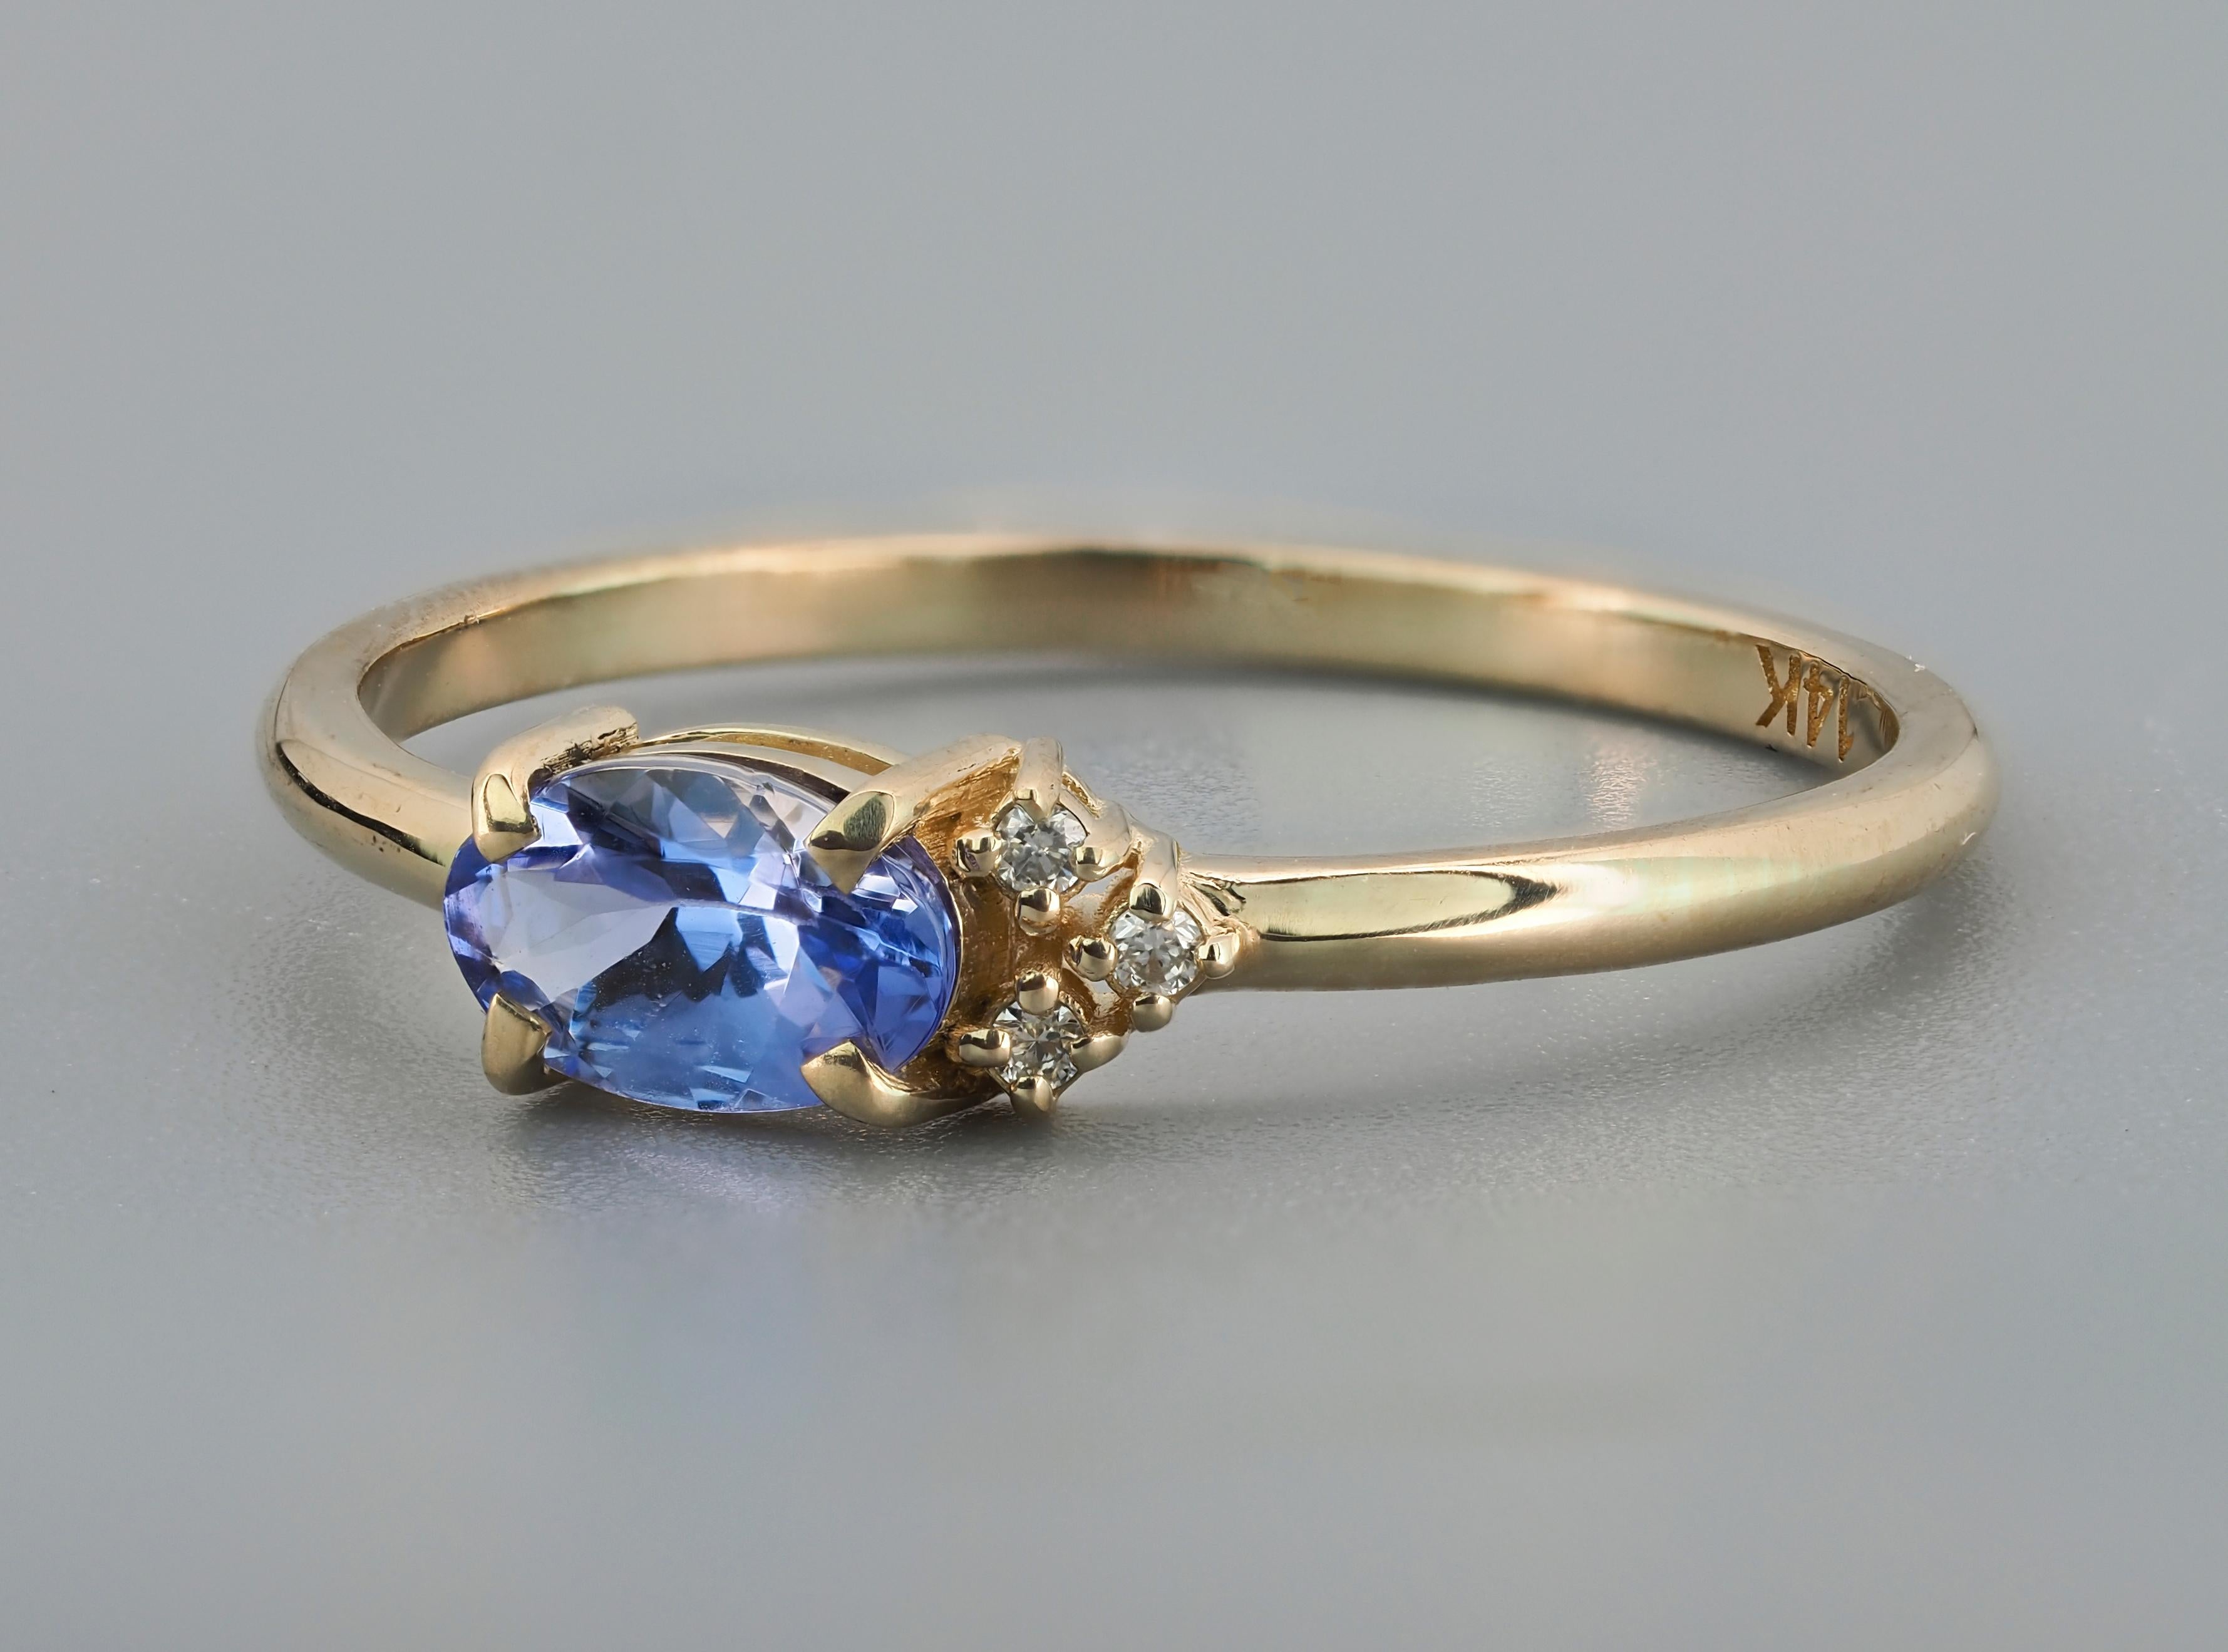 For Sale:  Natural Tanzanite 14k Gold Ring, Tanzanite Diamond Engagement Ring 7